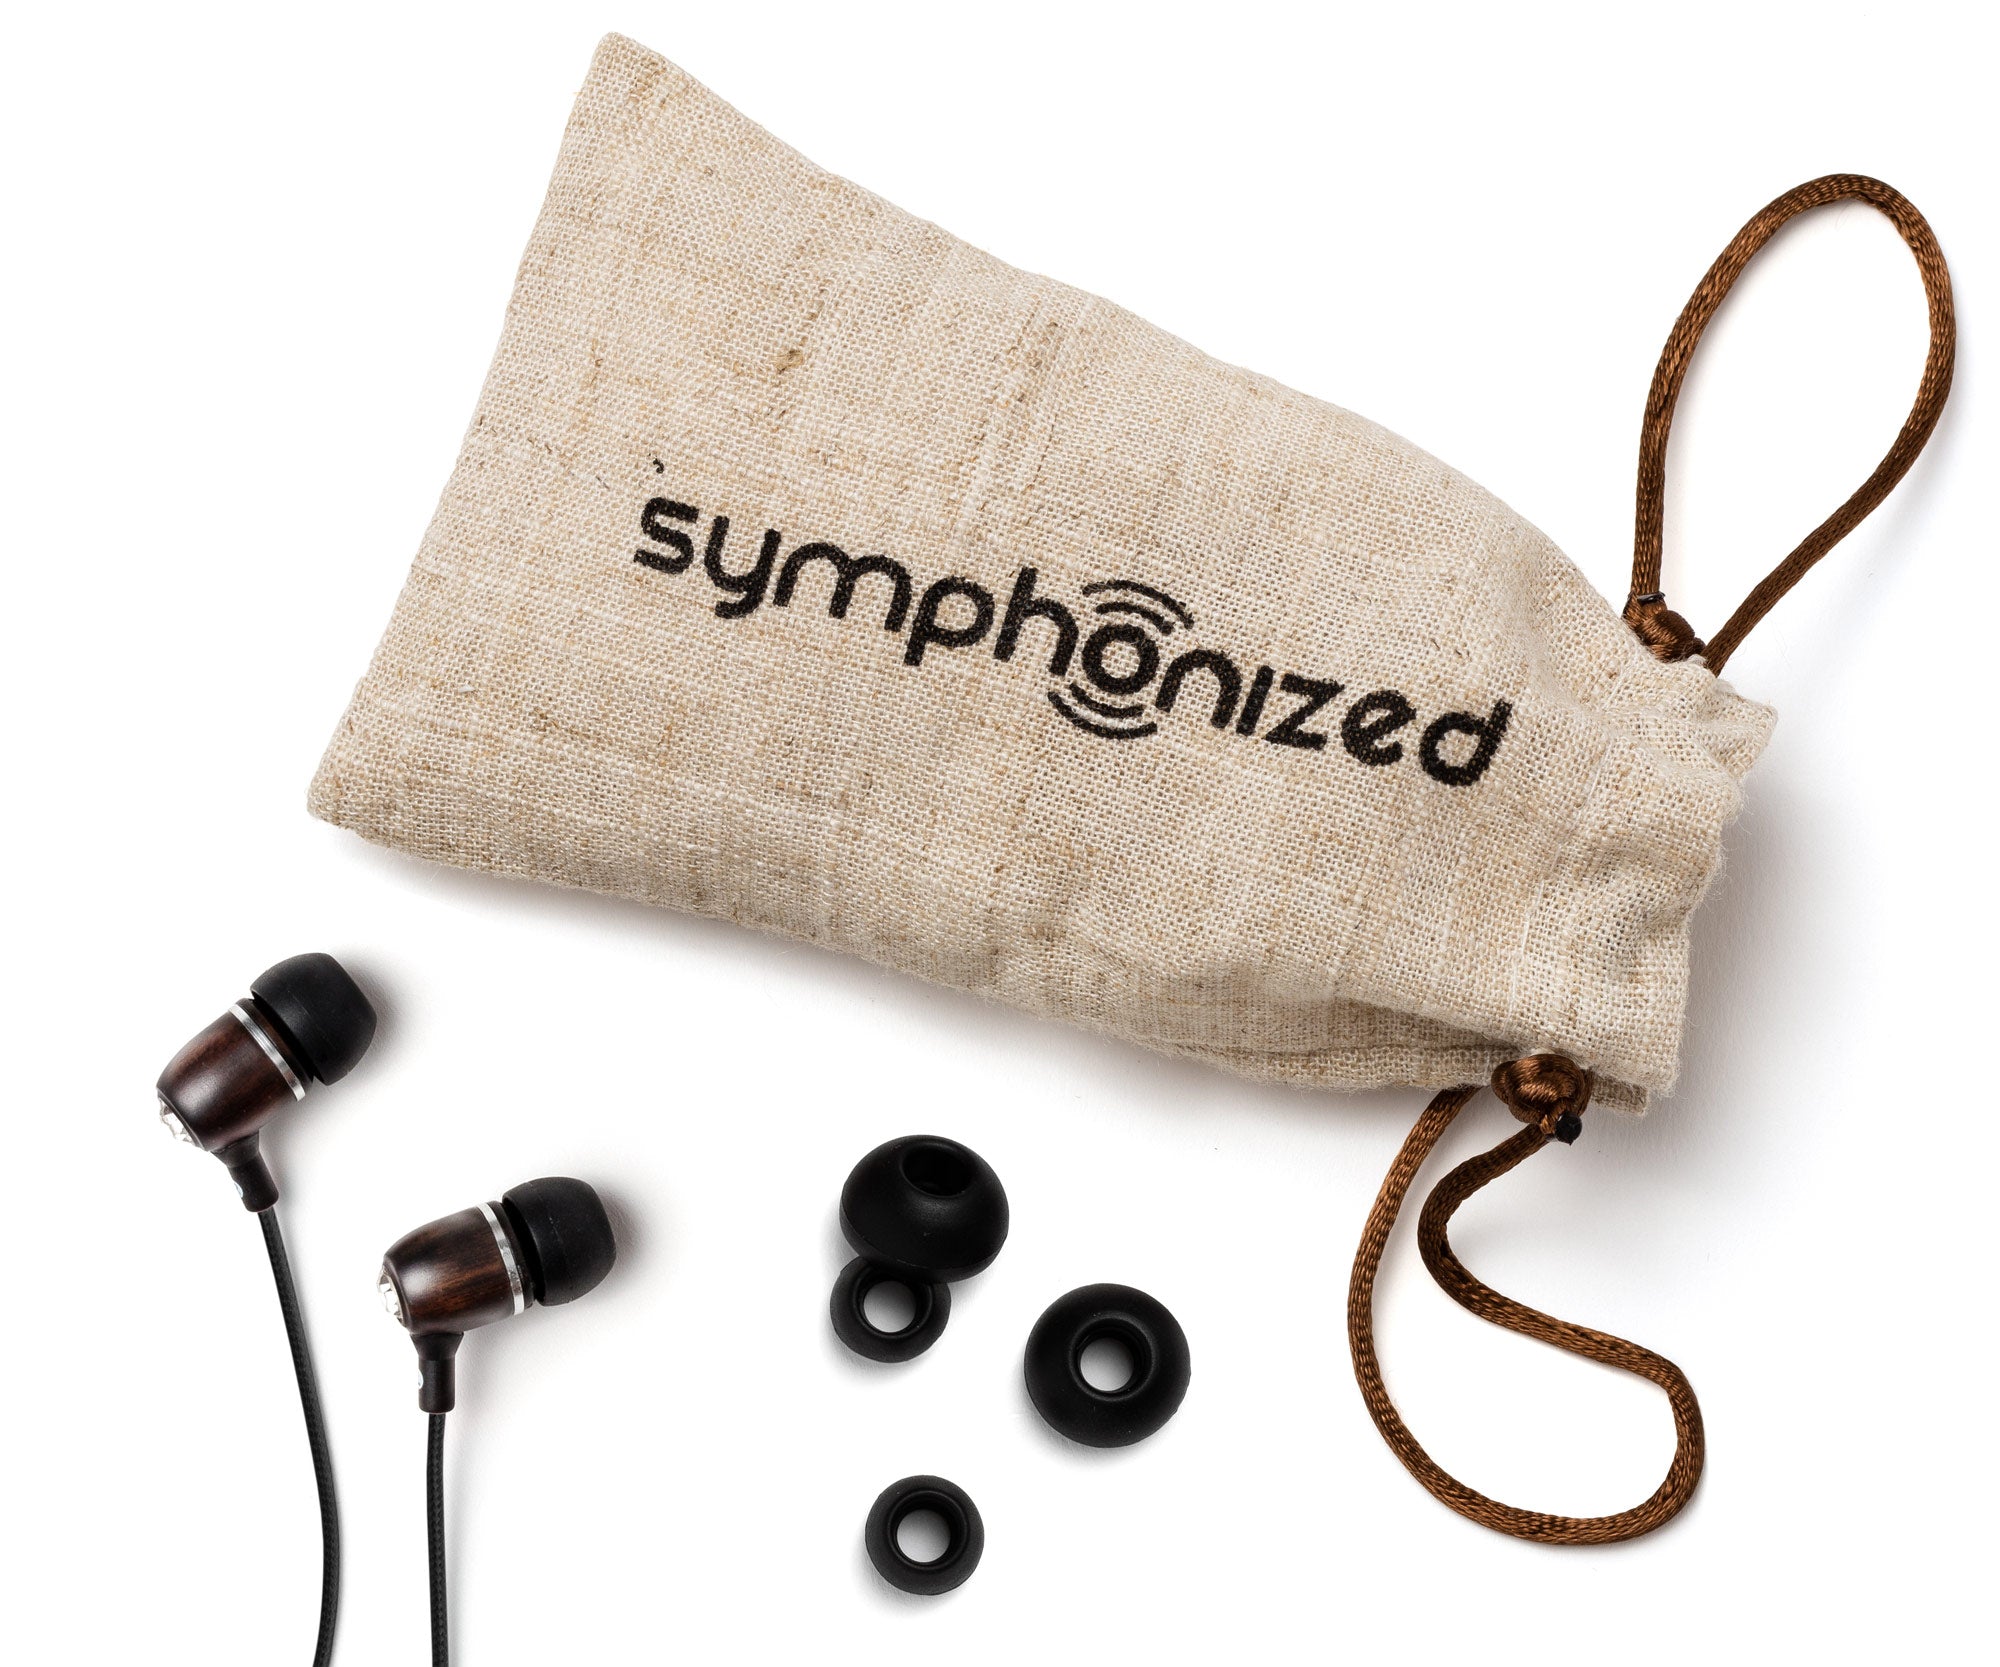 NRG Bling In-Ear Wood Headphones - Black